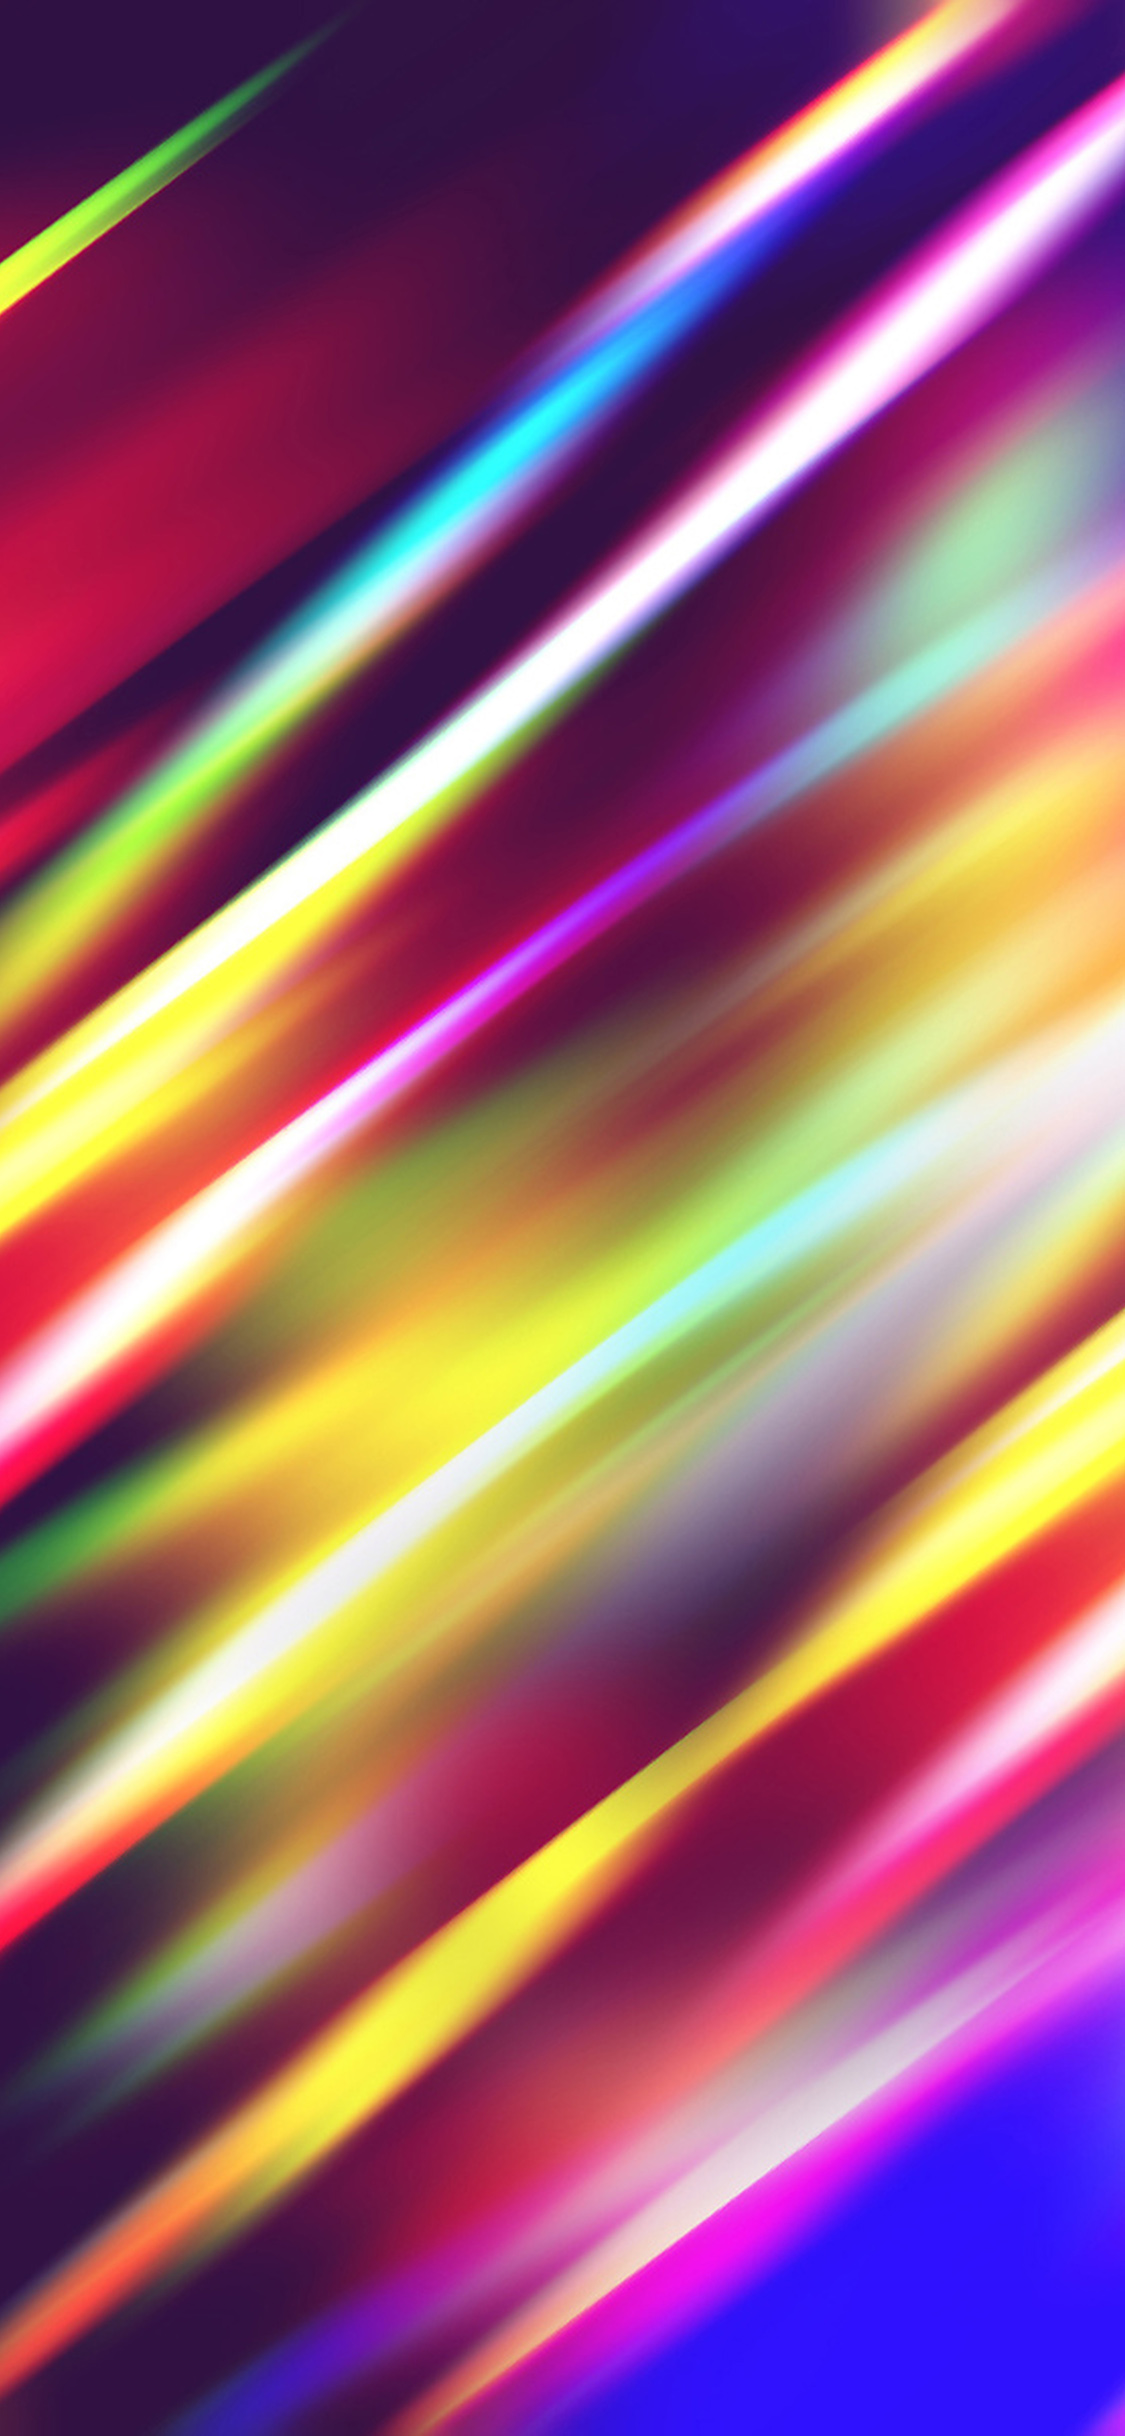 Lights rainbow pattern iPhone X Wallpaper Free Download